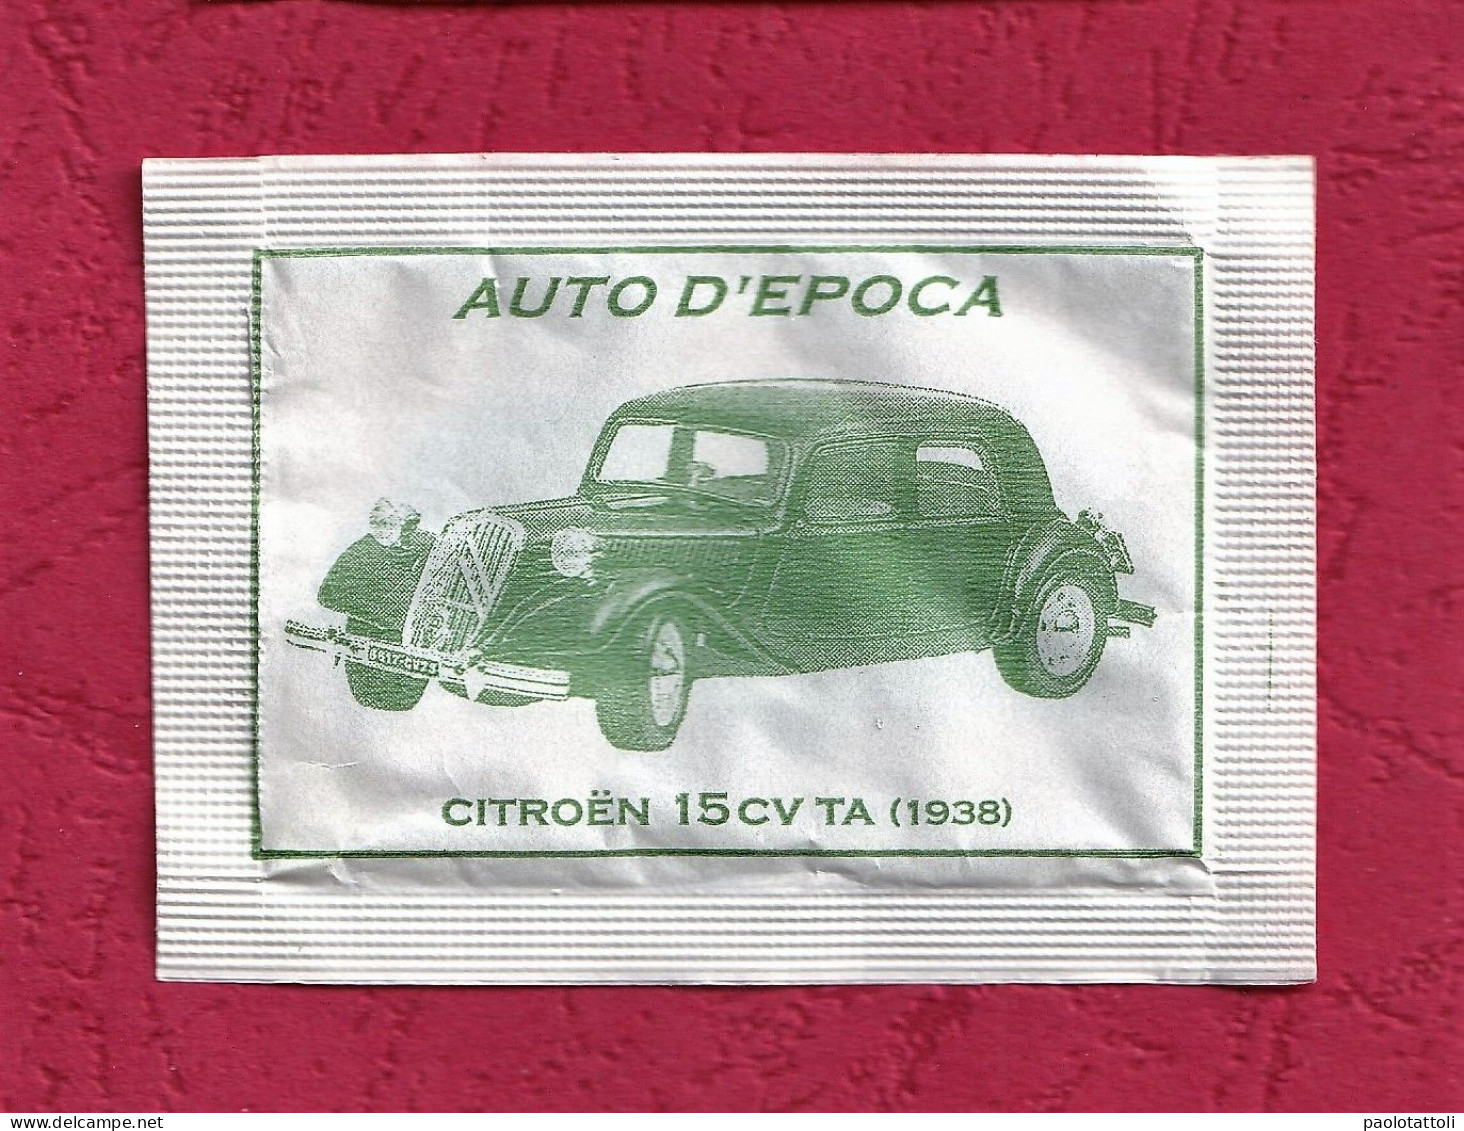 Bustina Vuota Zucchero. Empty Sugar Bag- Cars. Auto D'epoca, Citroen 15 Cv TA-1938. Packed By Pubblisugar, Andria. BA. - Zucker